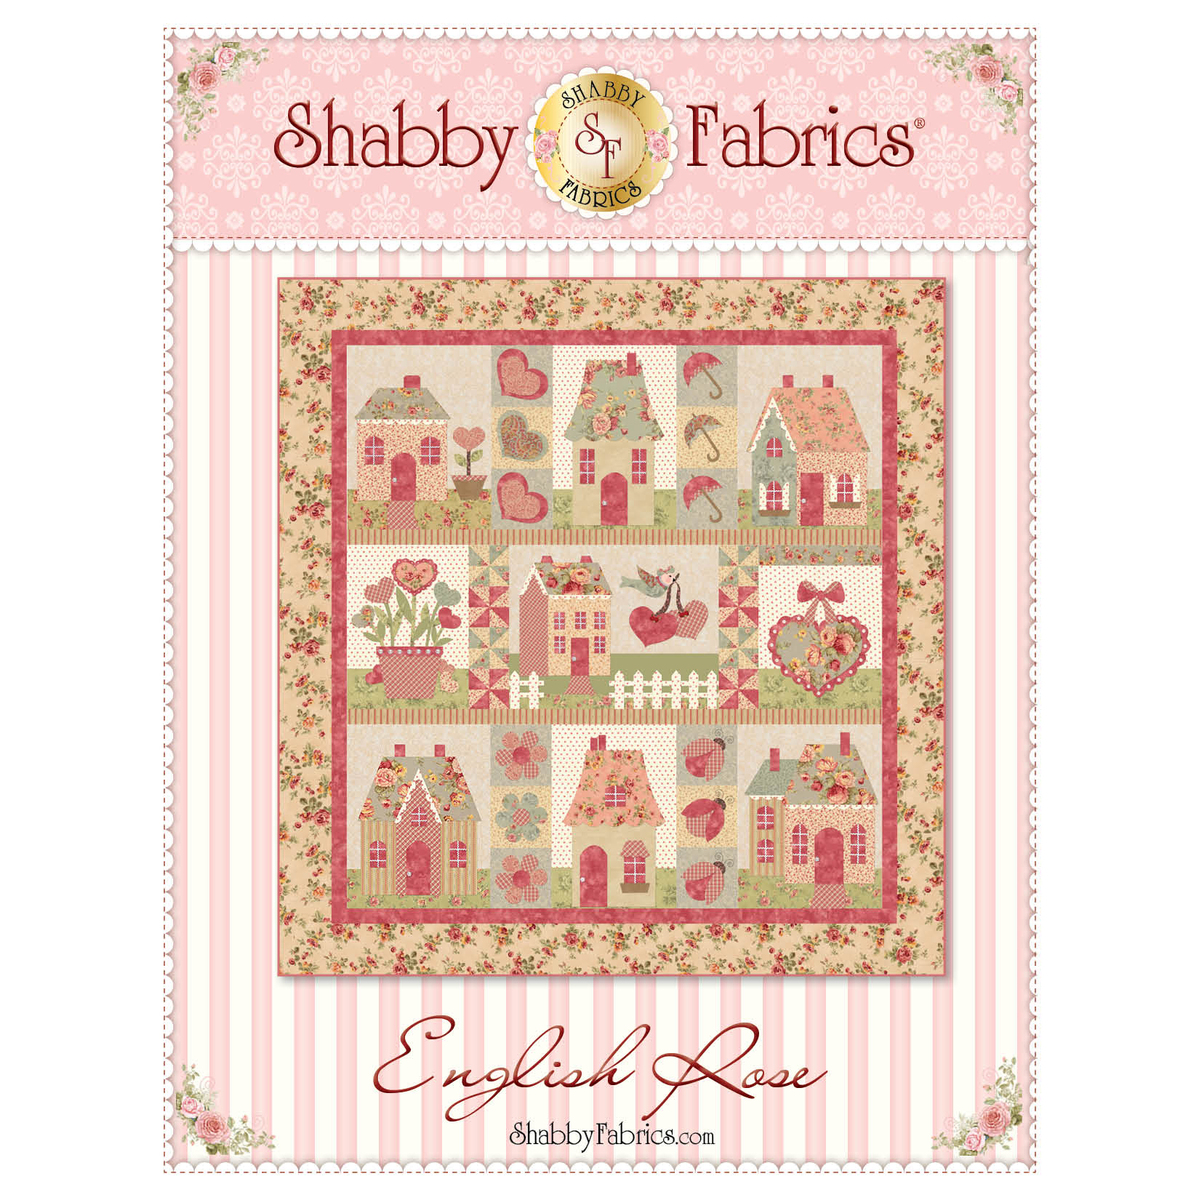 zij is iets neus English Rose Pattern | Shabby Fabrics